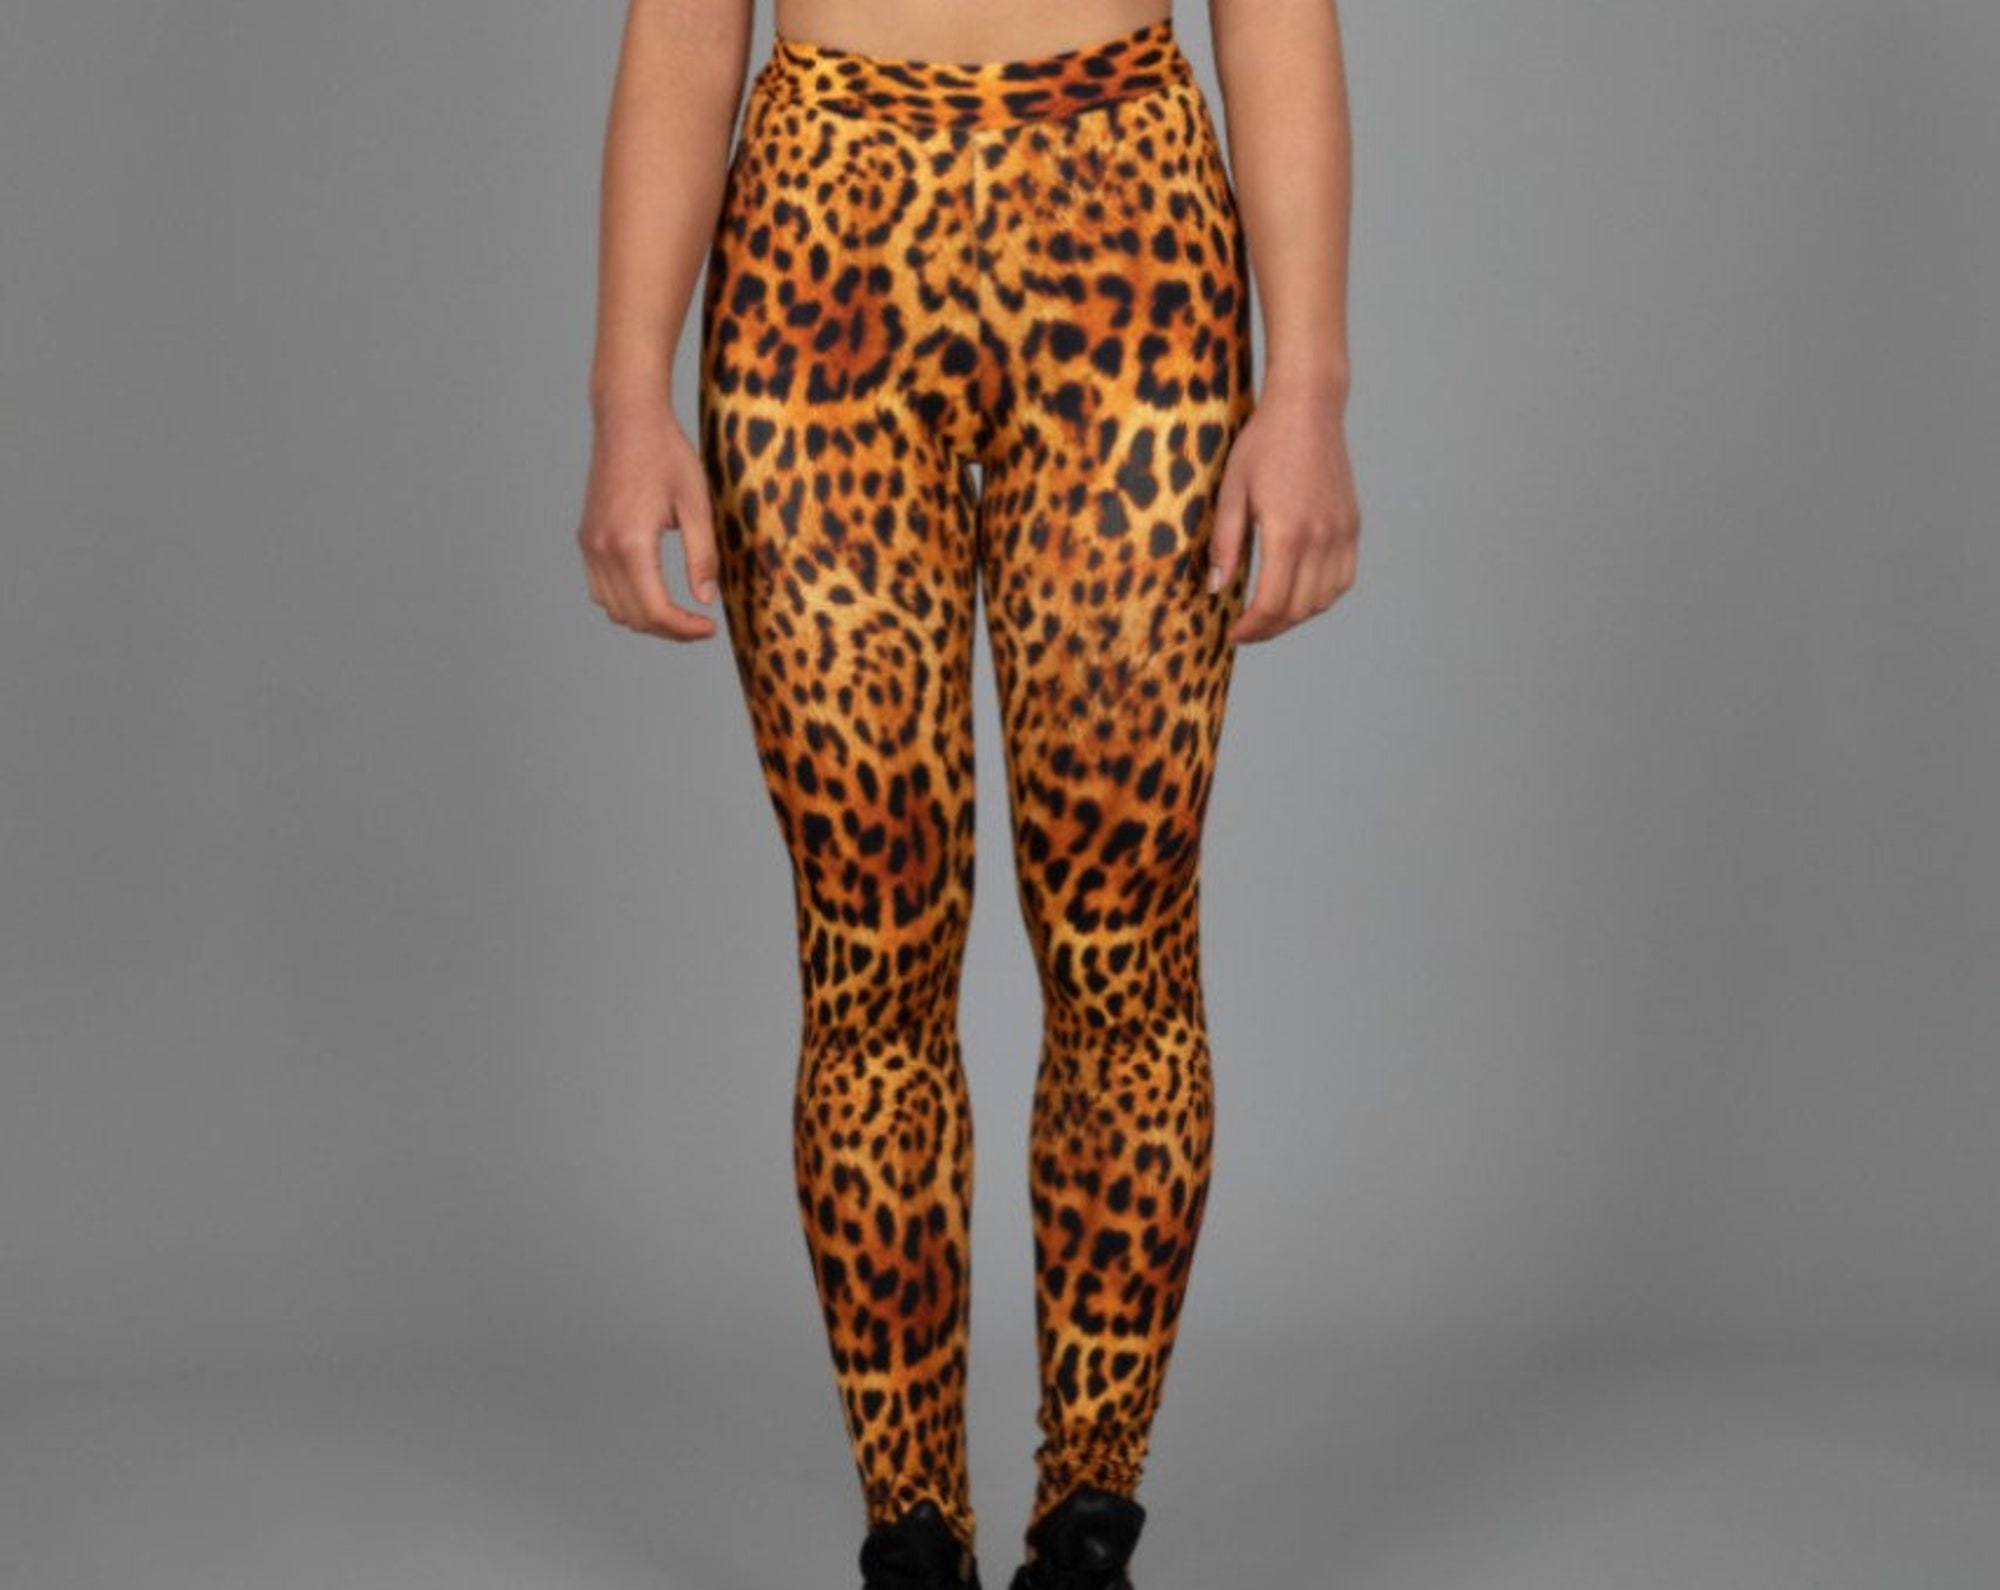 Discover High Waist Leggings Leopard Print, Yoga Pants